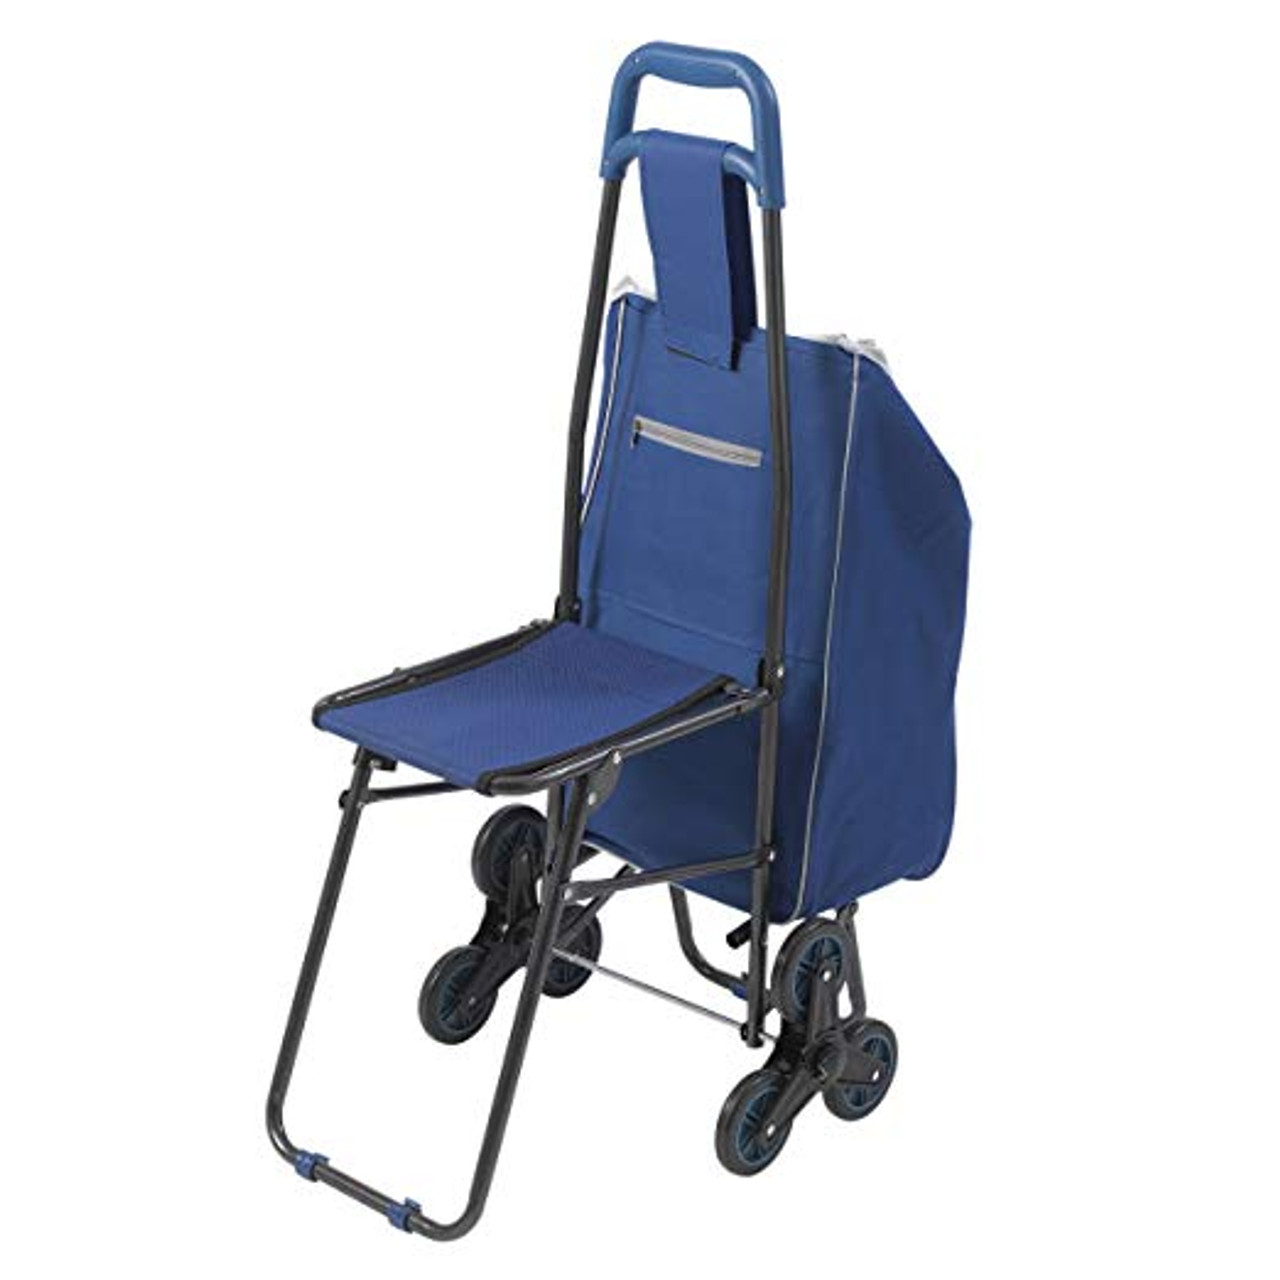 Drive Personal Shopping Cart - Blue